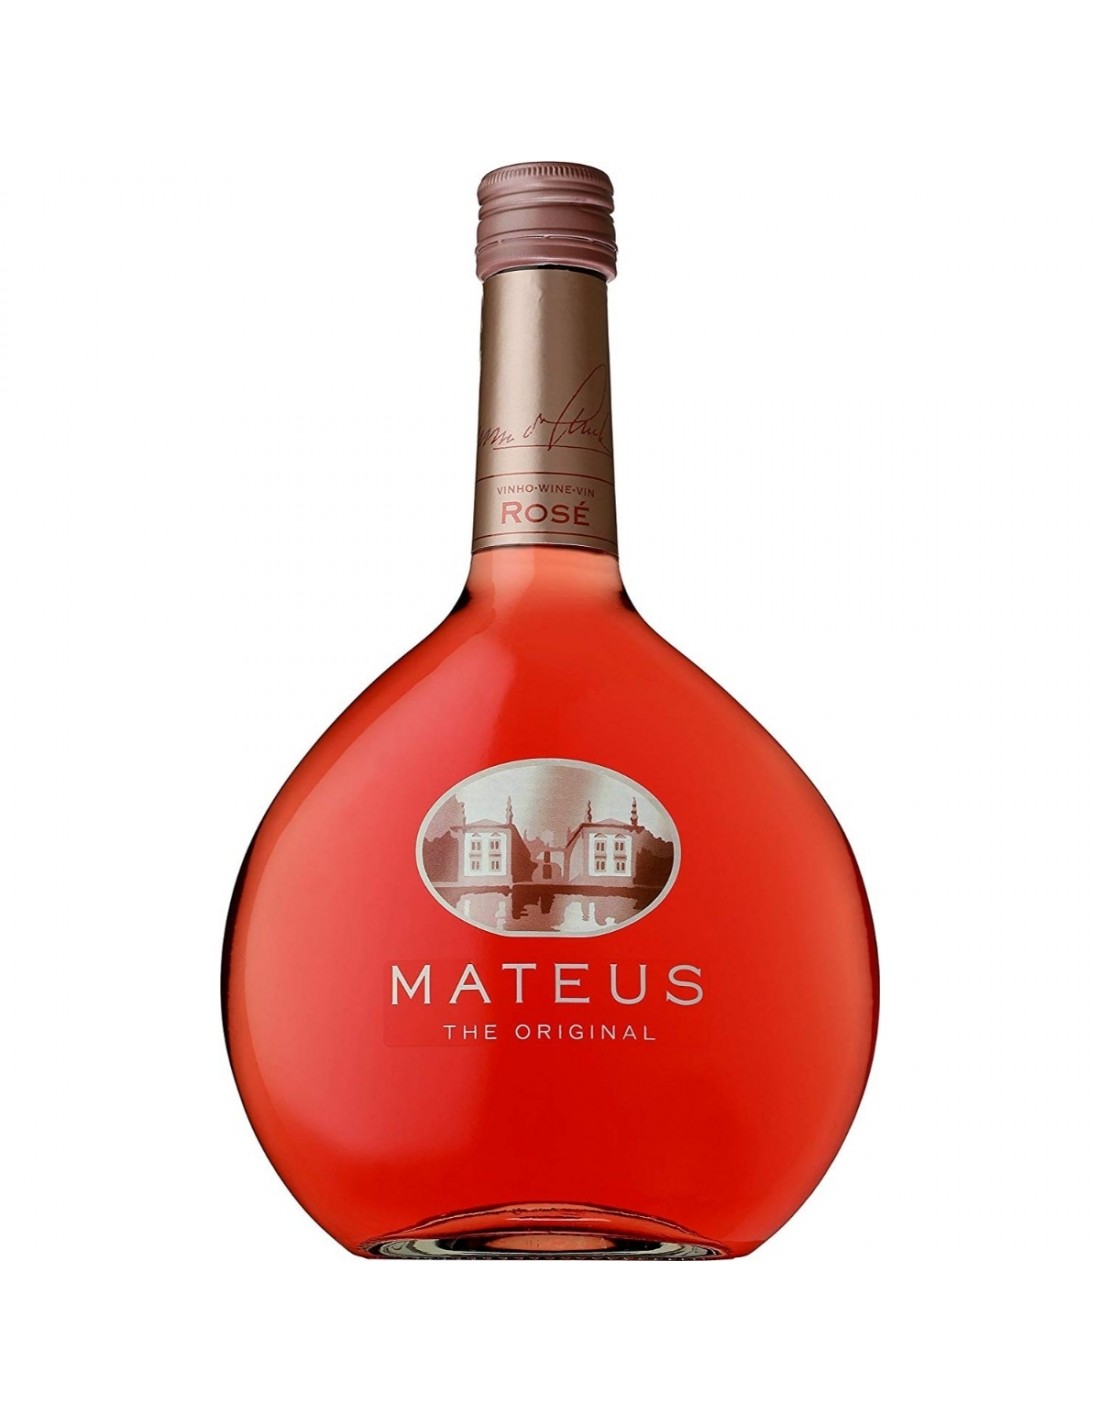 Vin roze demisec, Mateus Douro, 0.75L, 11% alc., Portugalia alcooldiscount.ro